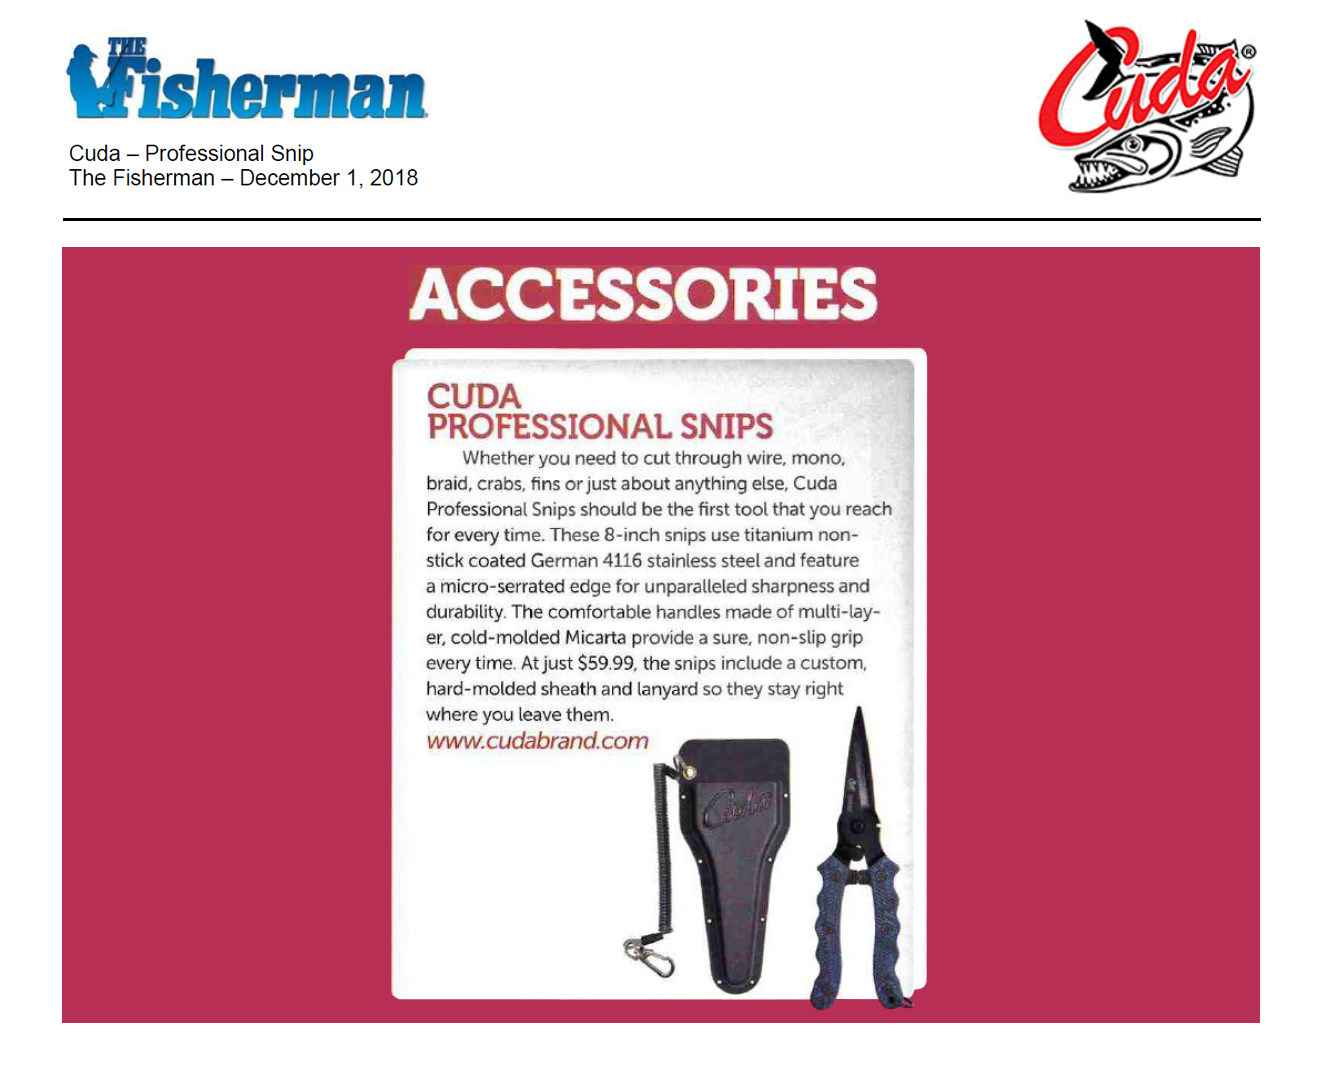 Cuda Professional Snips - Featured in Fisherman Dec 1, 2018